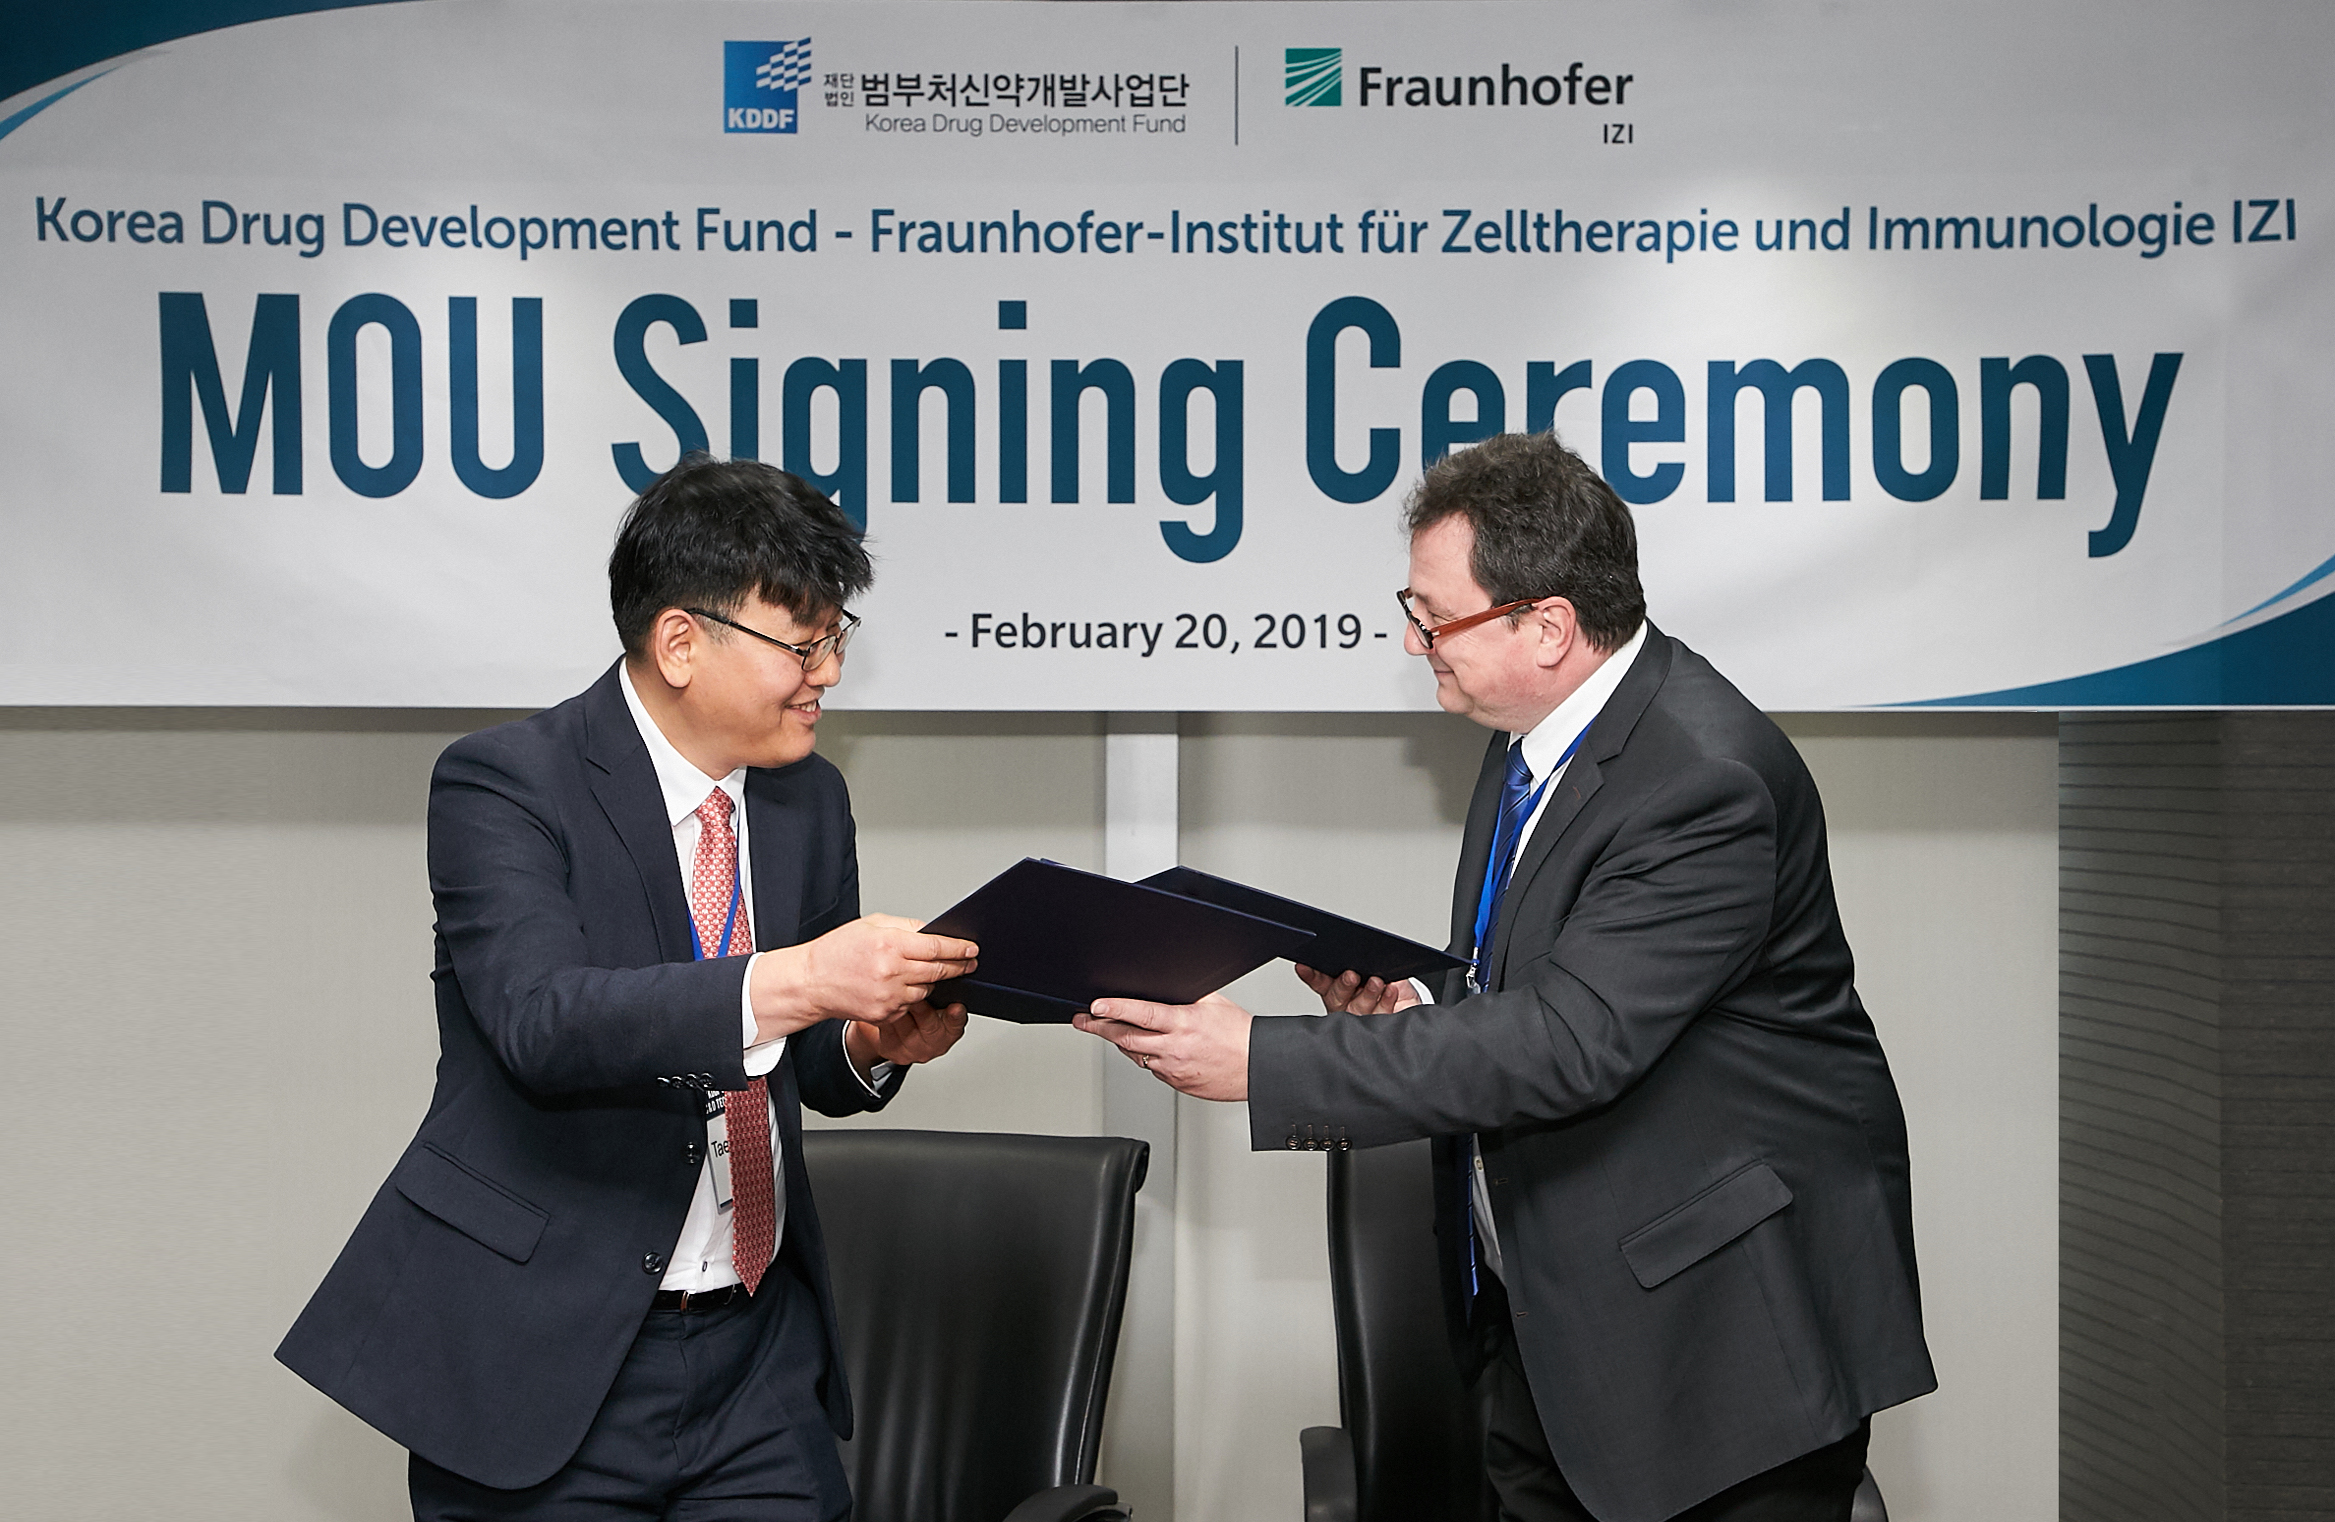 Signing of the Memorandum of Understanding by Taeerk Kim (CBO KDDF) and Dr. Thomas Tradler (Fraunhofer IZI)